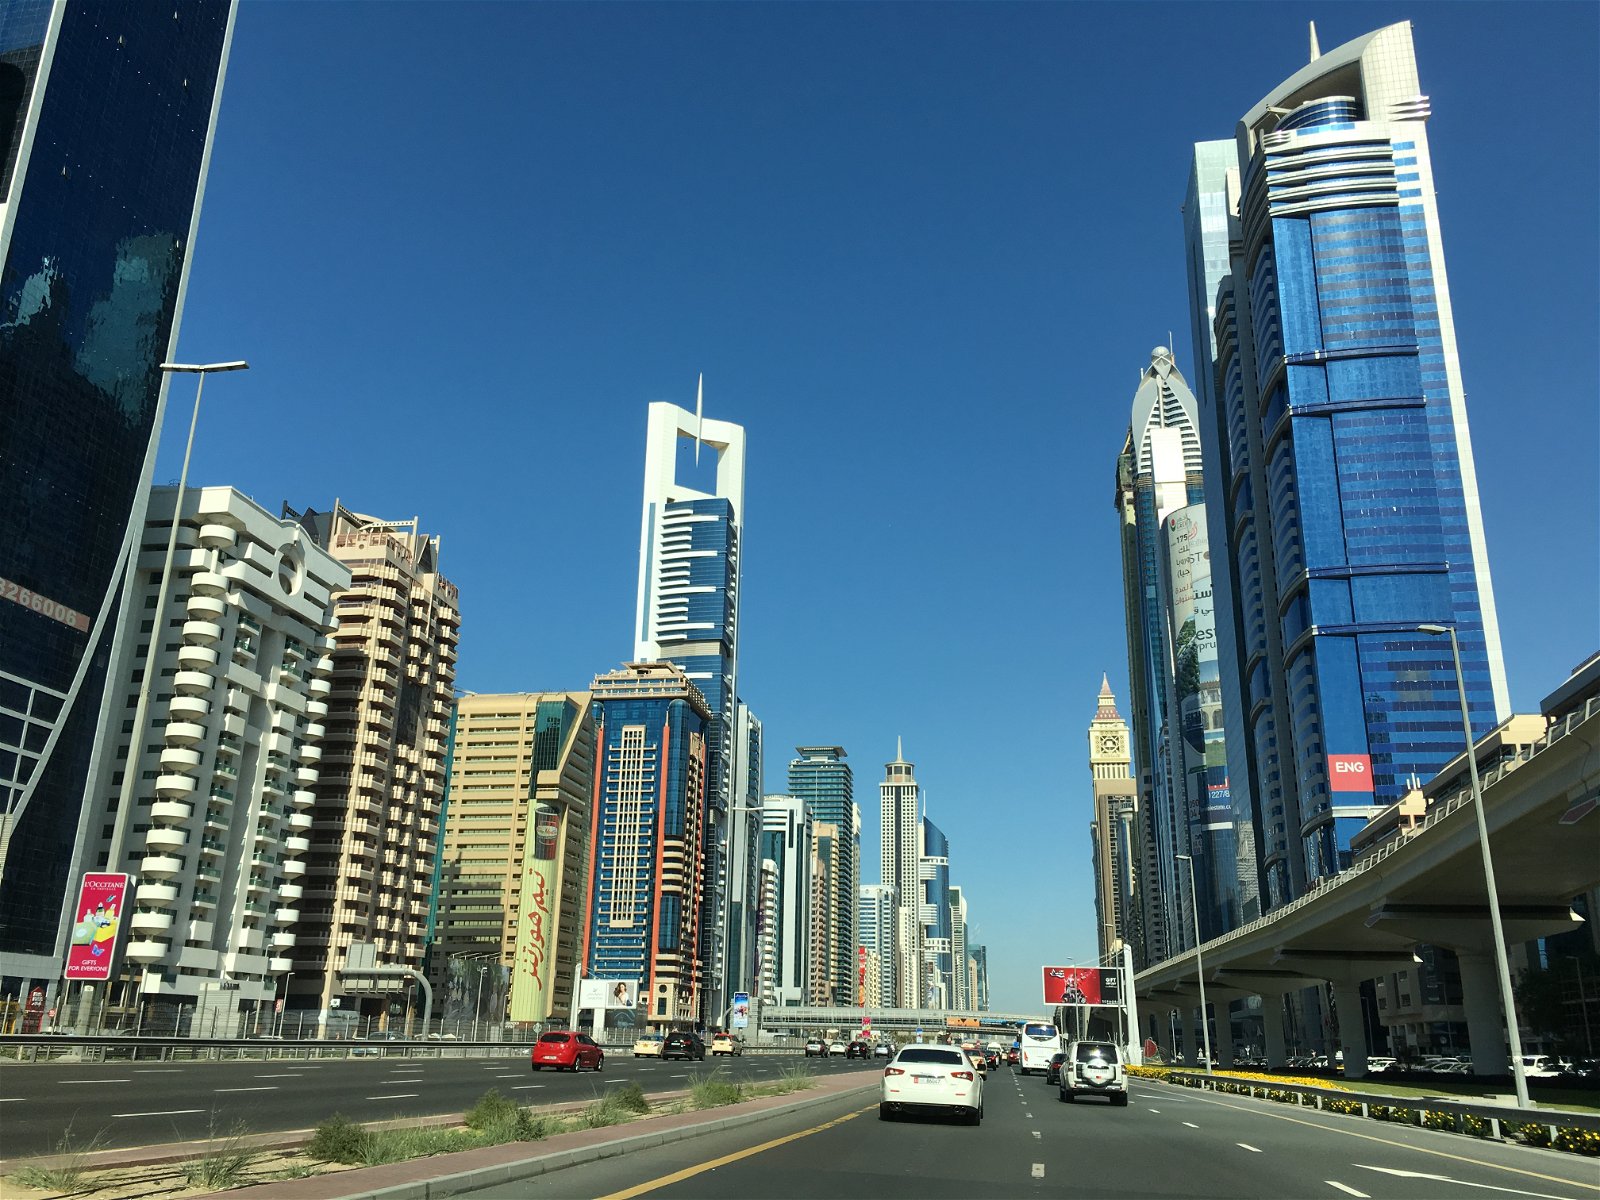 Tourists often love Dubai for its fascinating architecture!